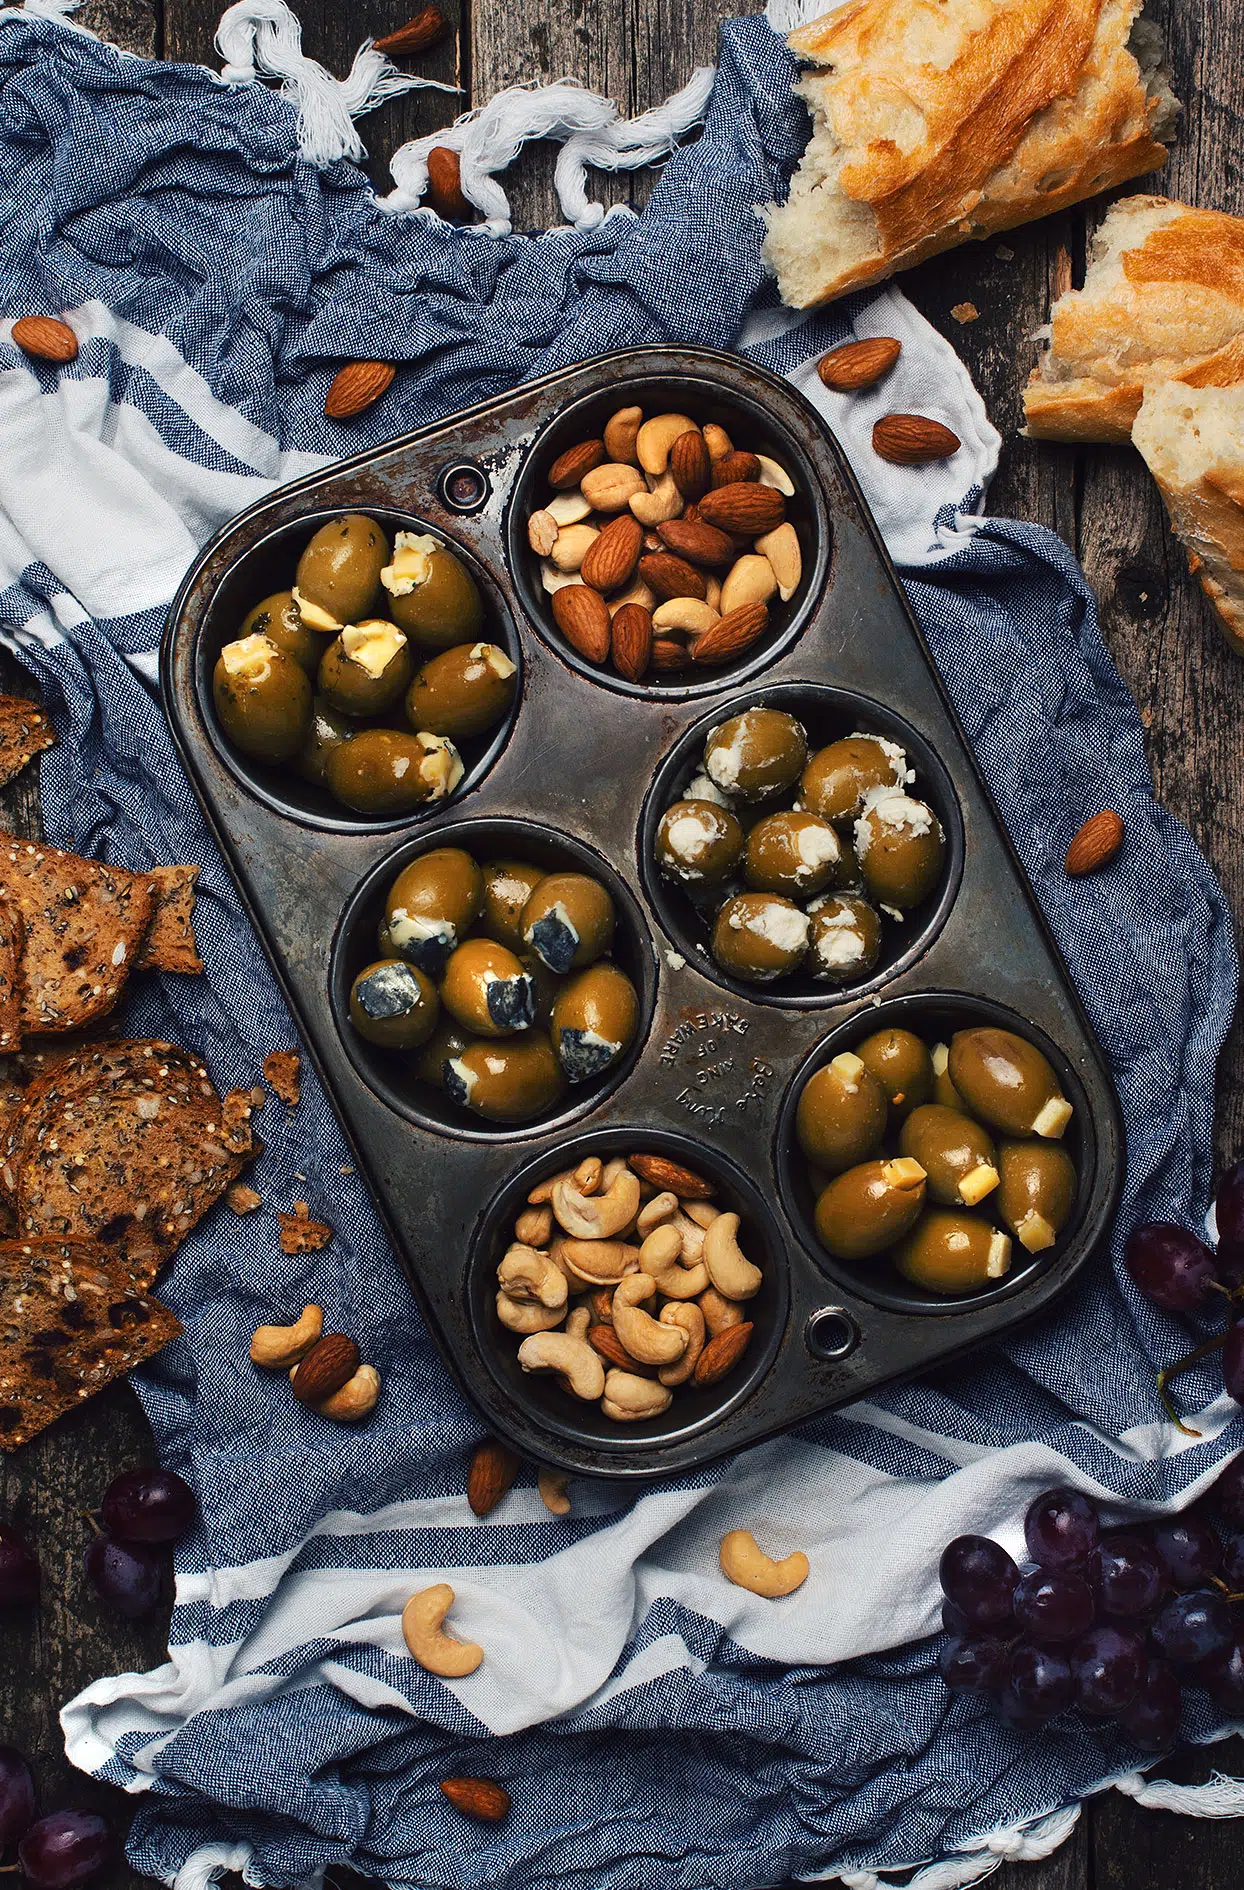 Legendary stuffed olives